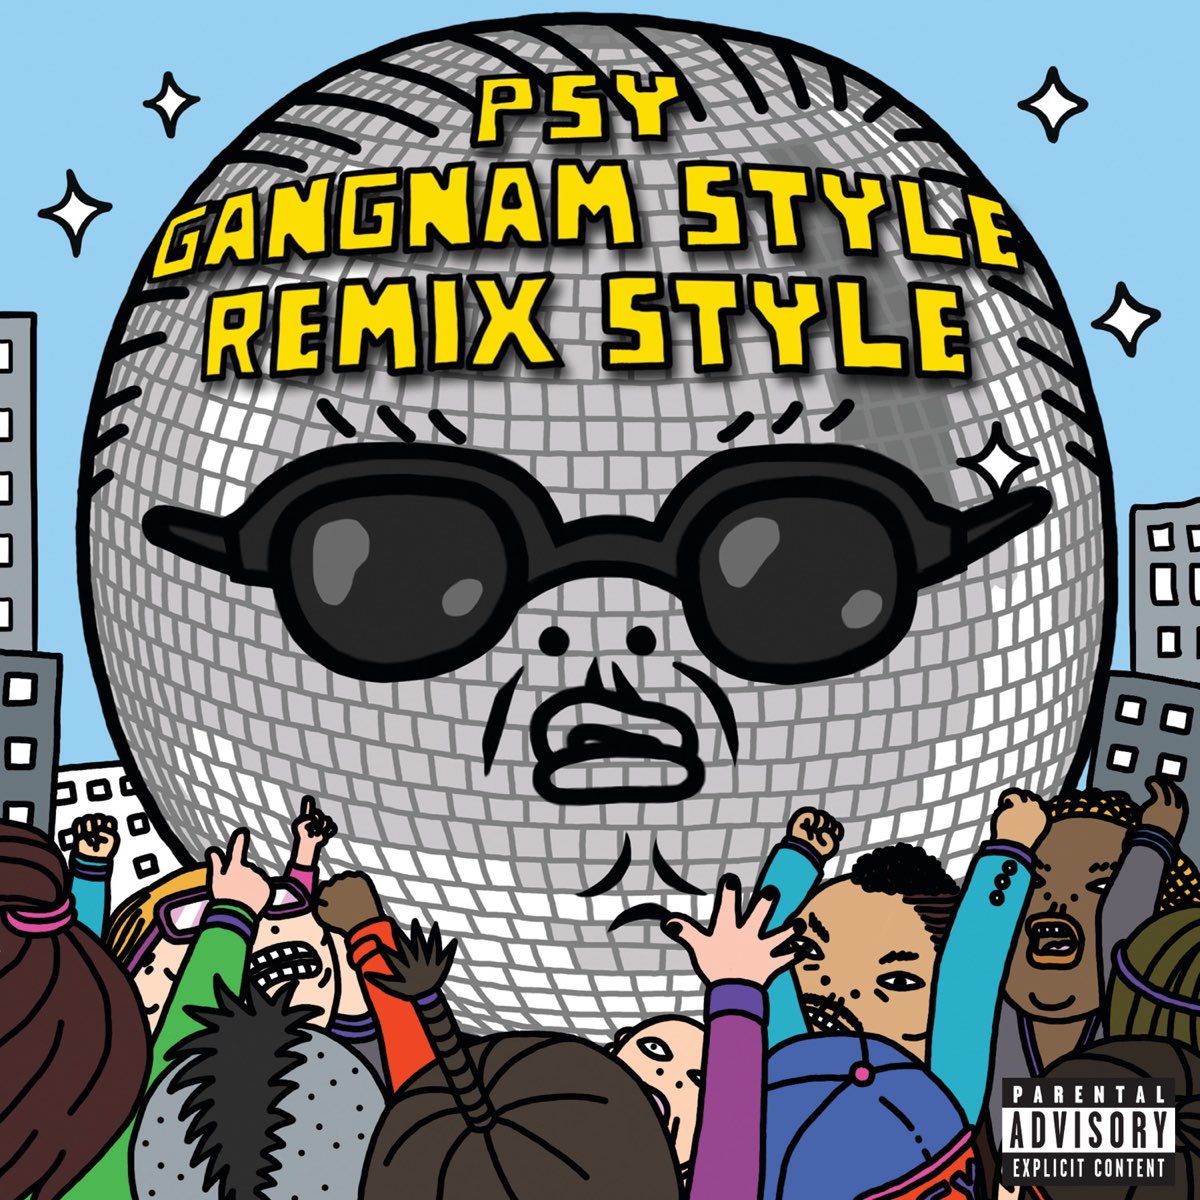 Альбом «Gangnam Style (Remix Style) - EP» (PSY) в Apple Music